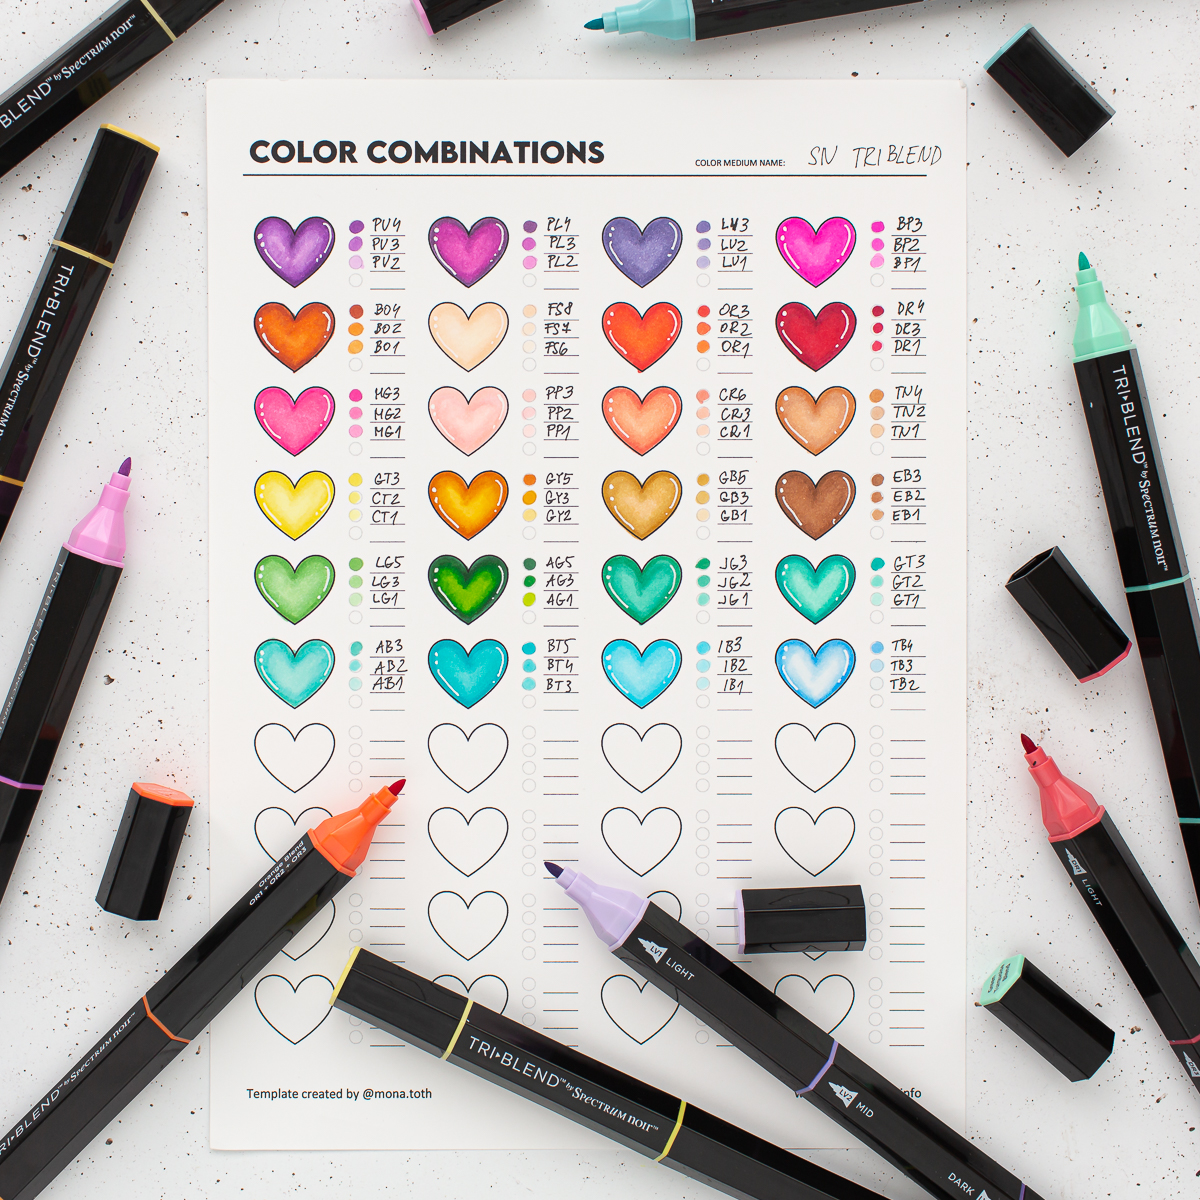 I Like Markers: Helpful Color Chart